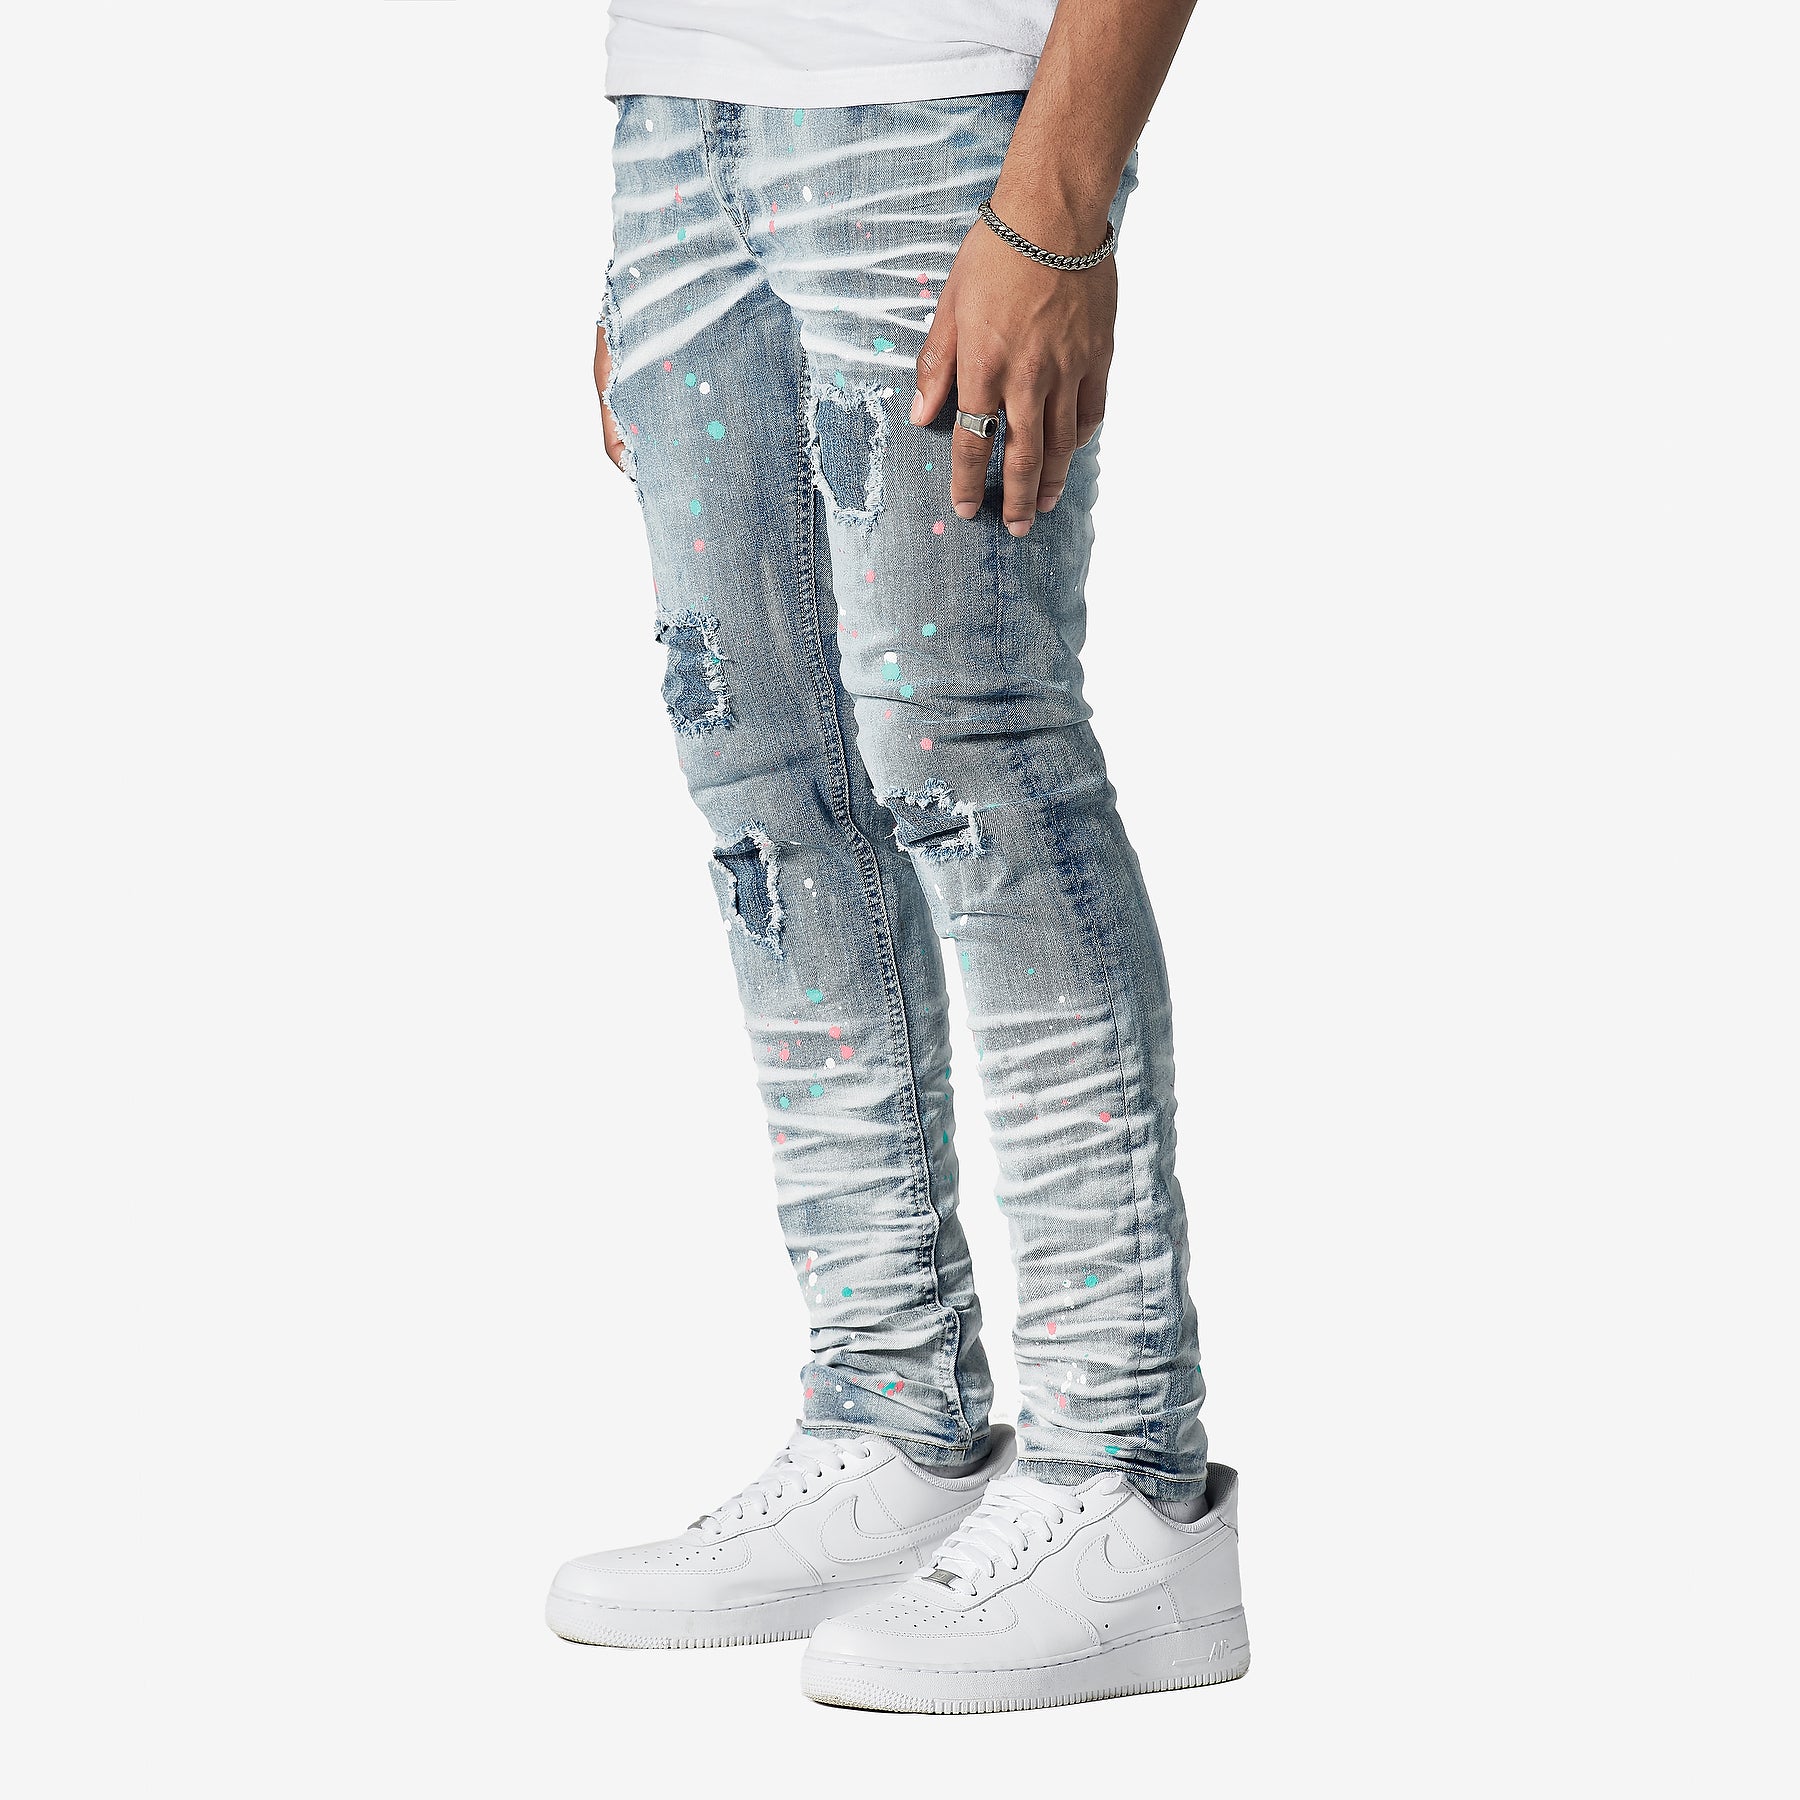 Close Blue Jeans Texture White Spot Stock Photo 1479789482 | Shutterstock